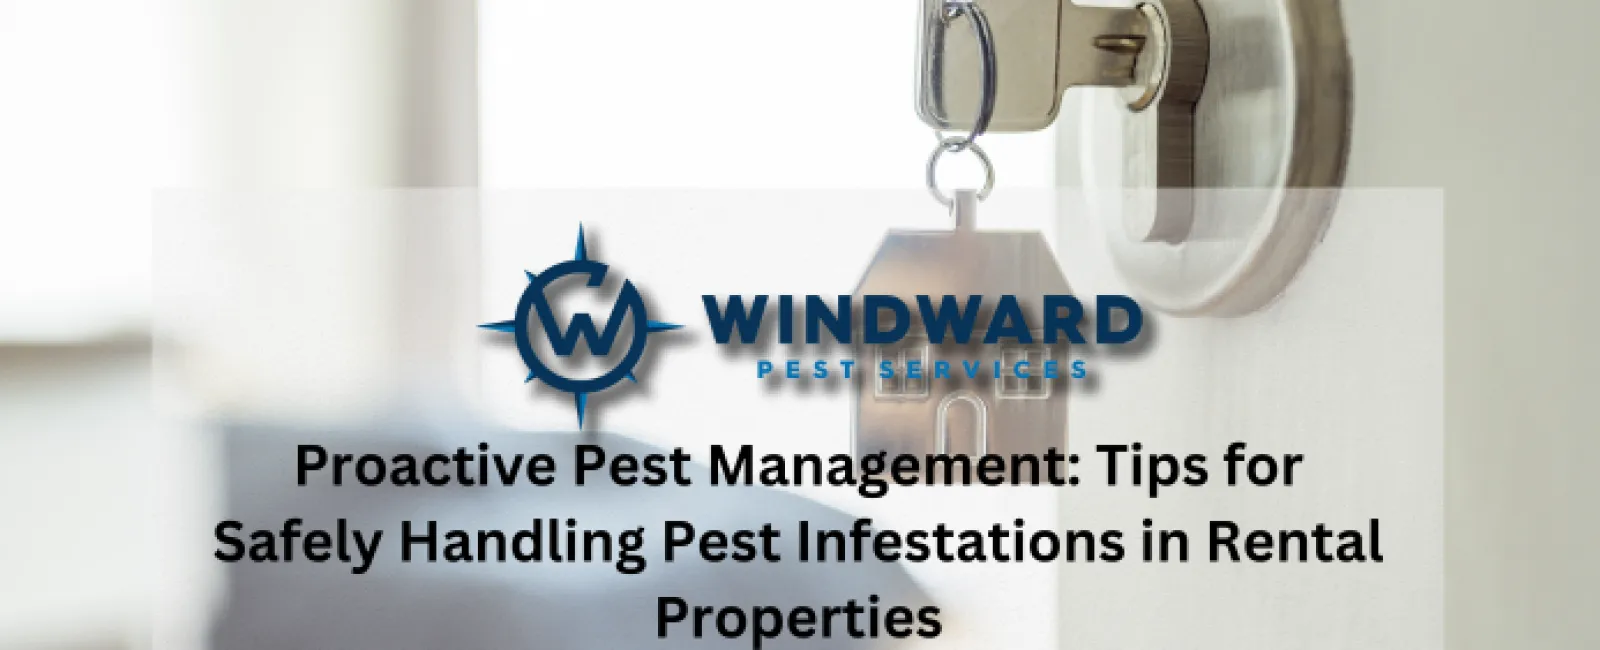 Proactive Pest Management: Tips for Safely Handling Pest Infestations in Rental Properties